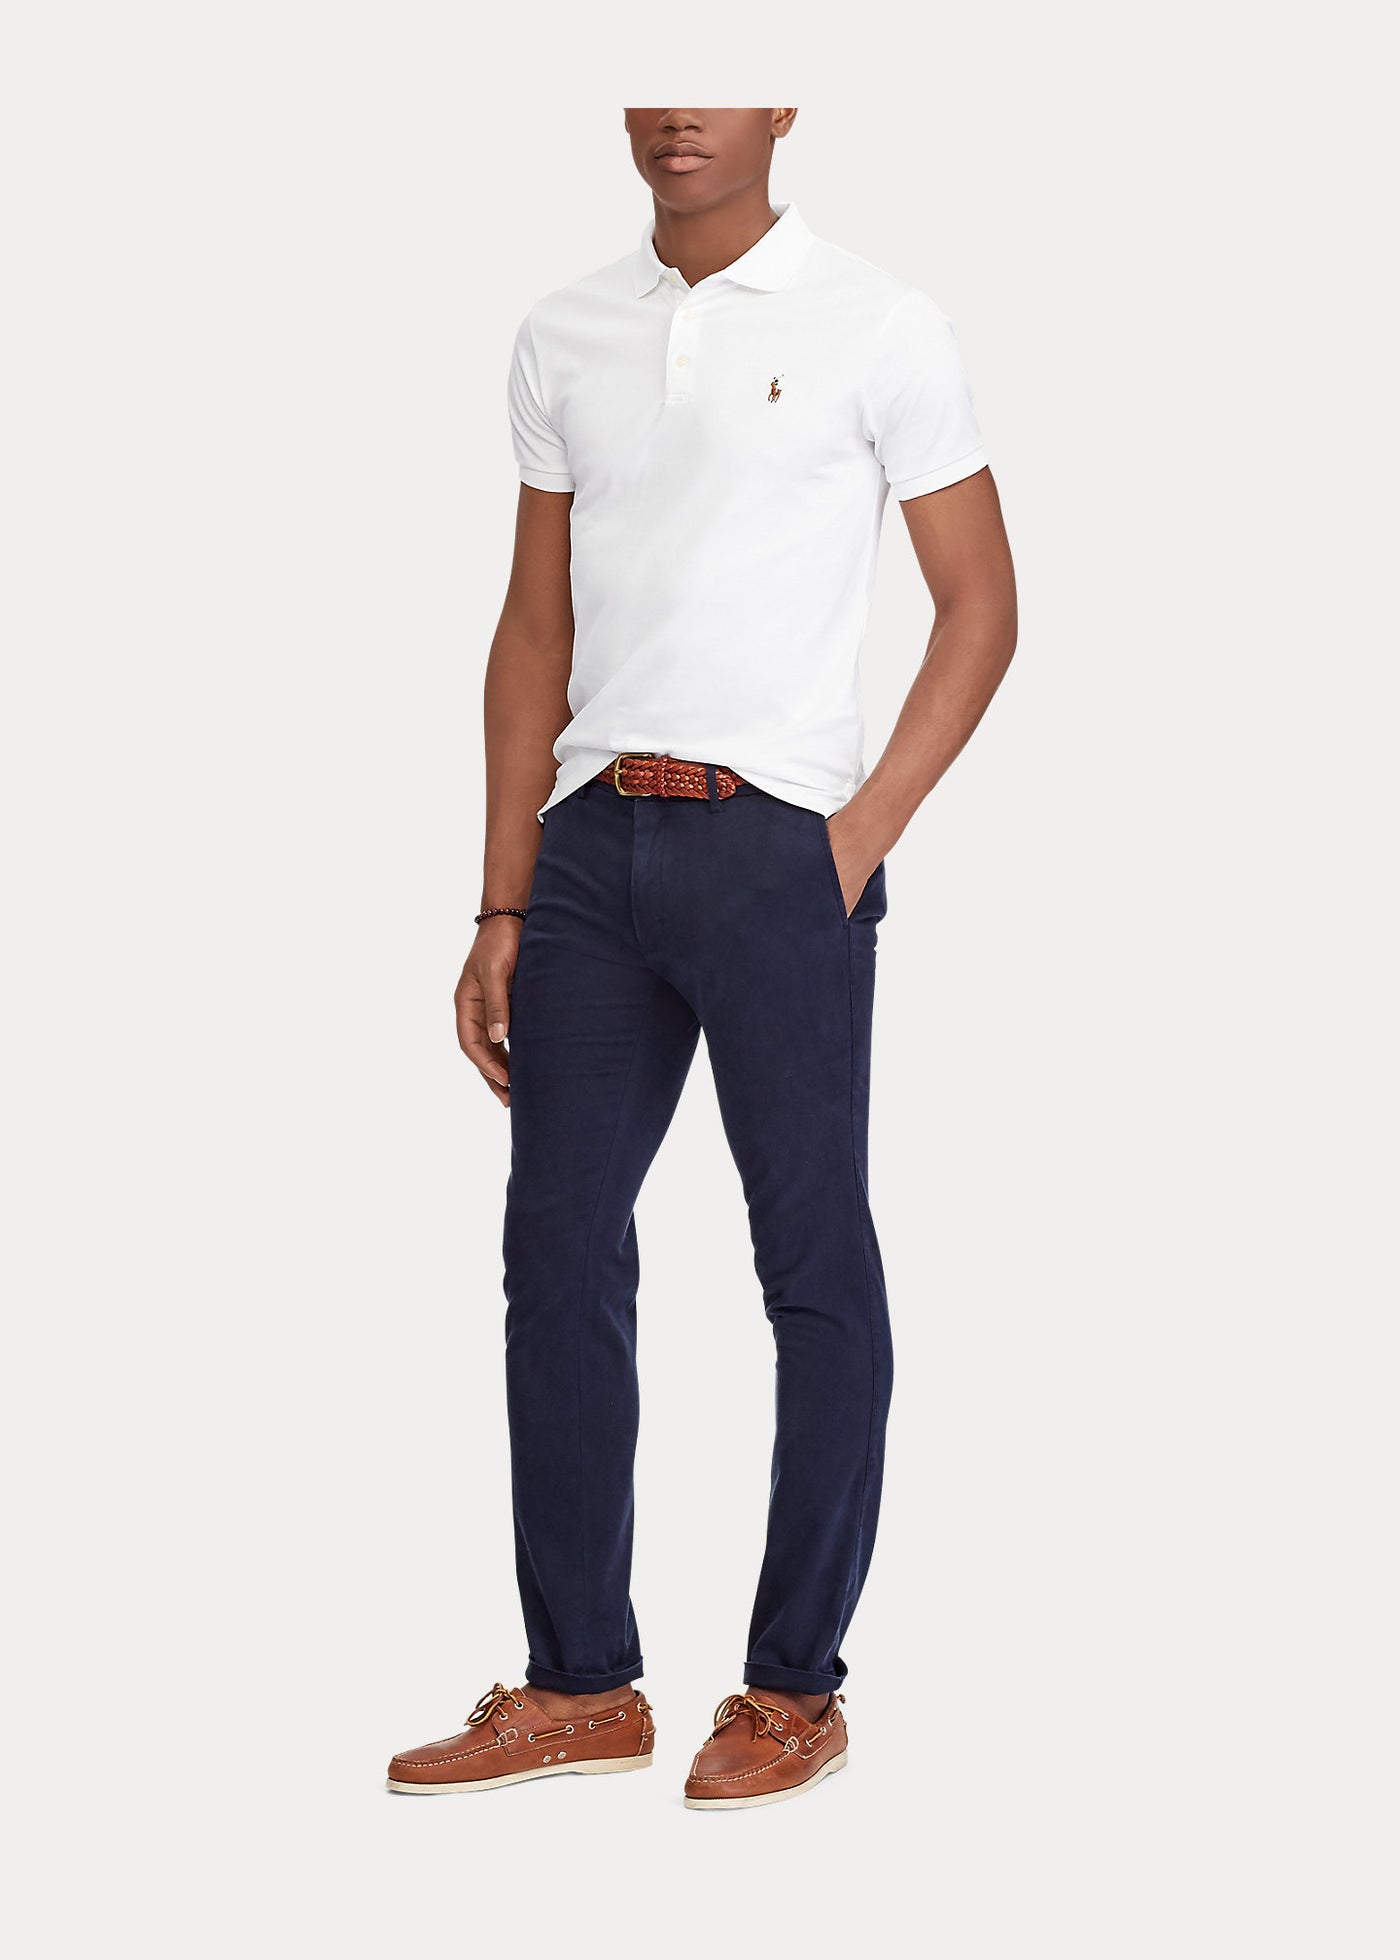 Ralph Lauren Slim Fit Soft-Touch Polo Shirt | White